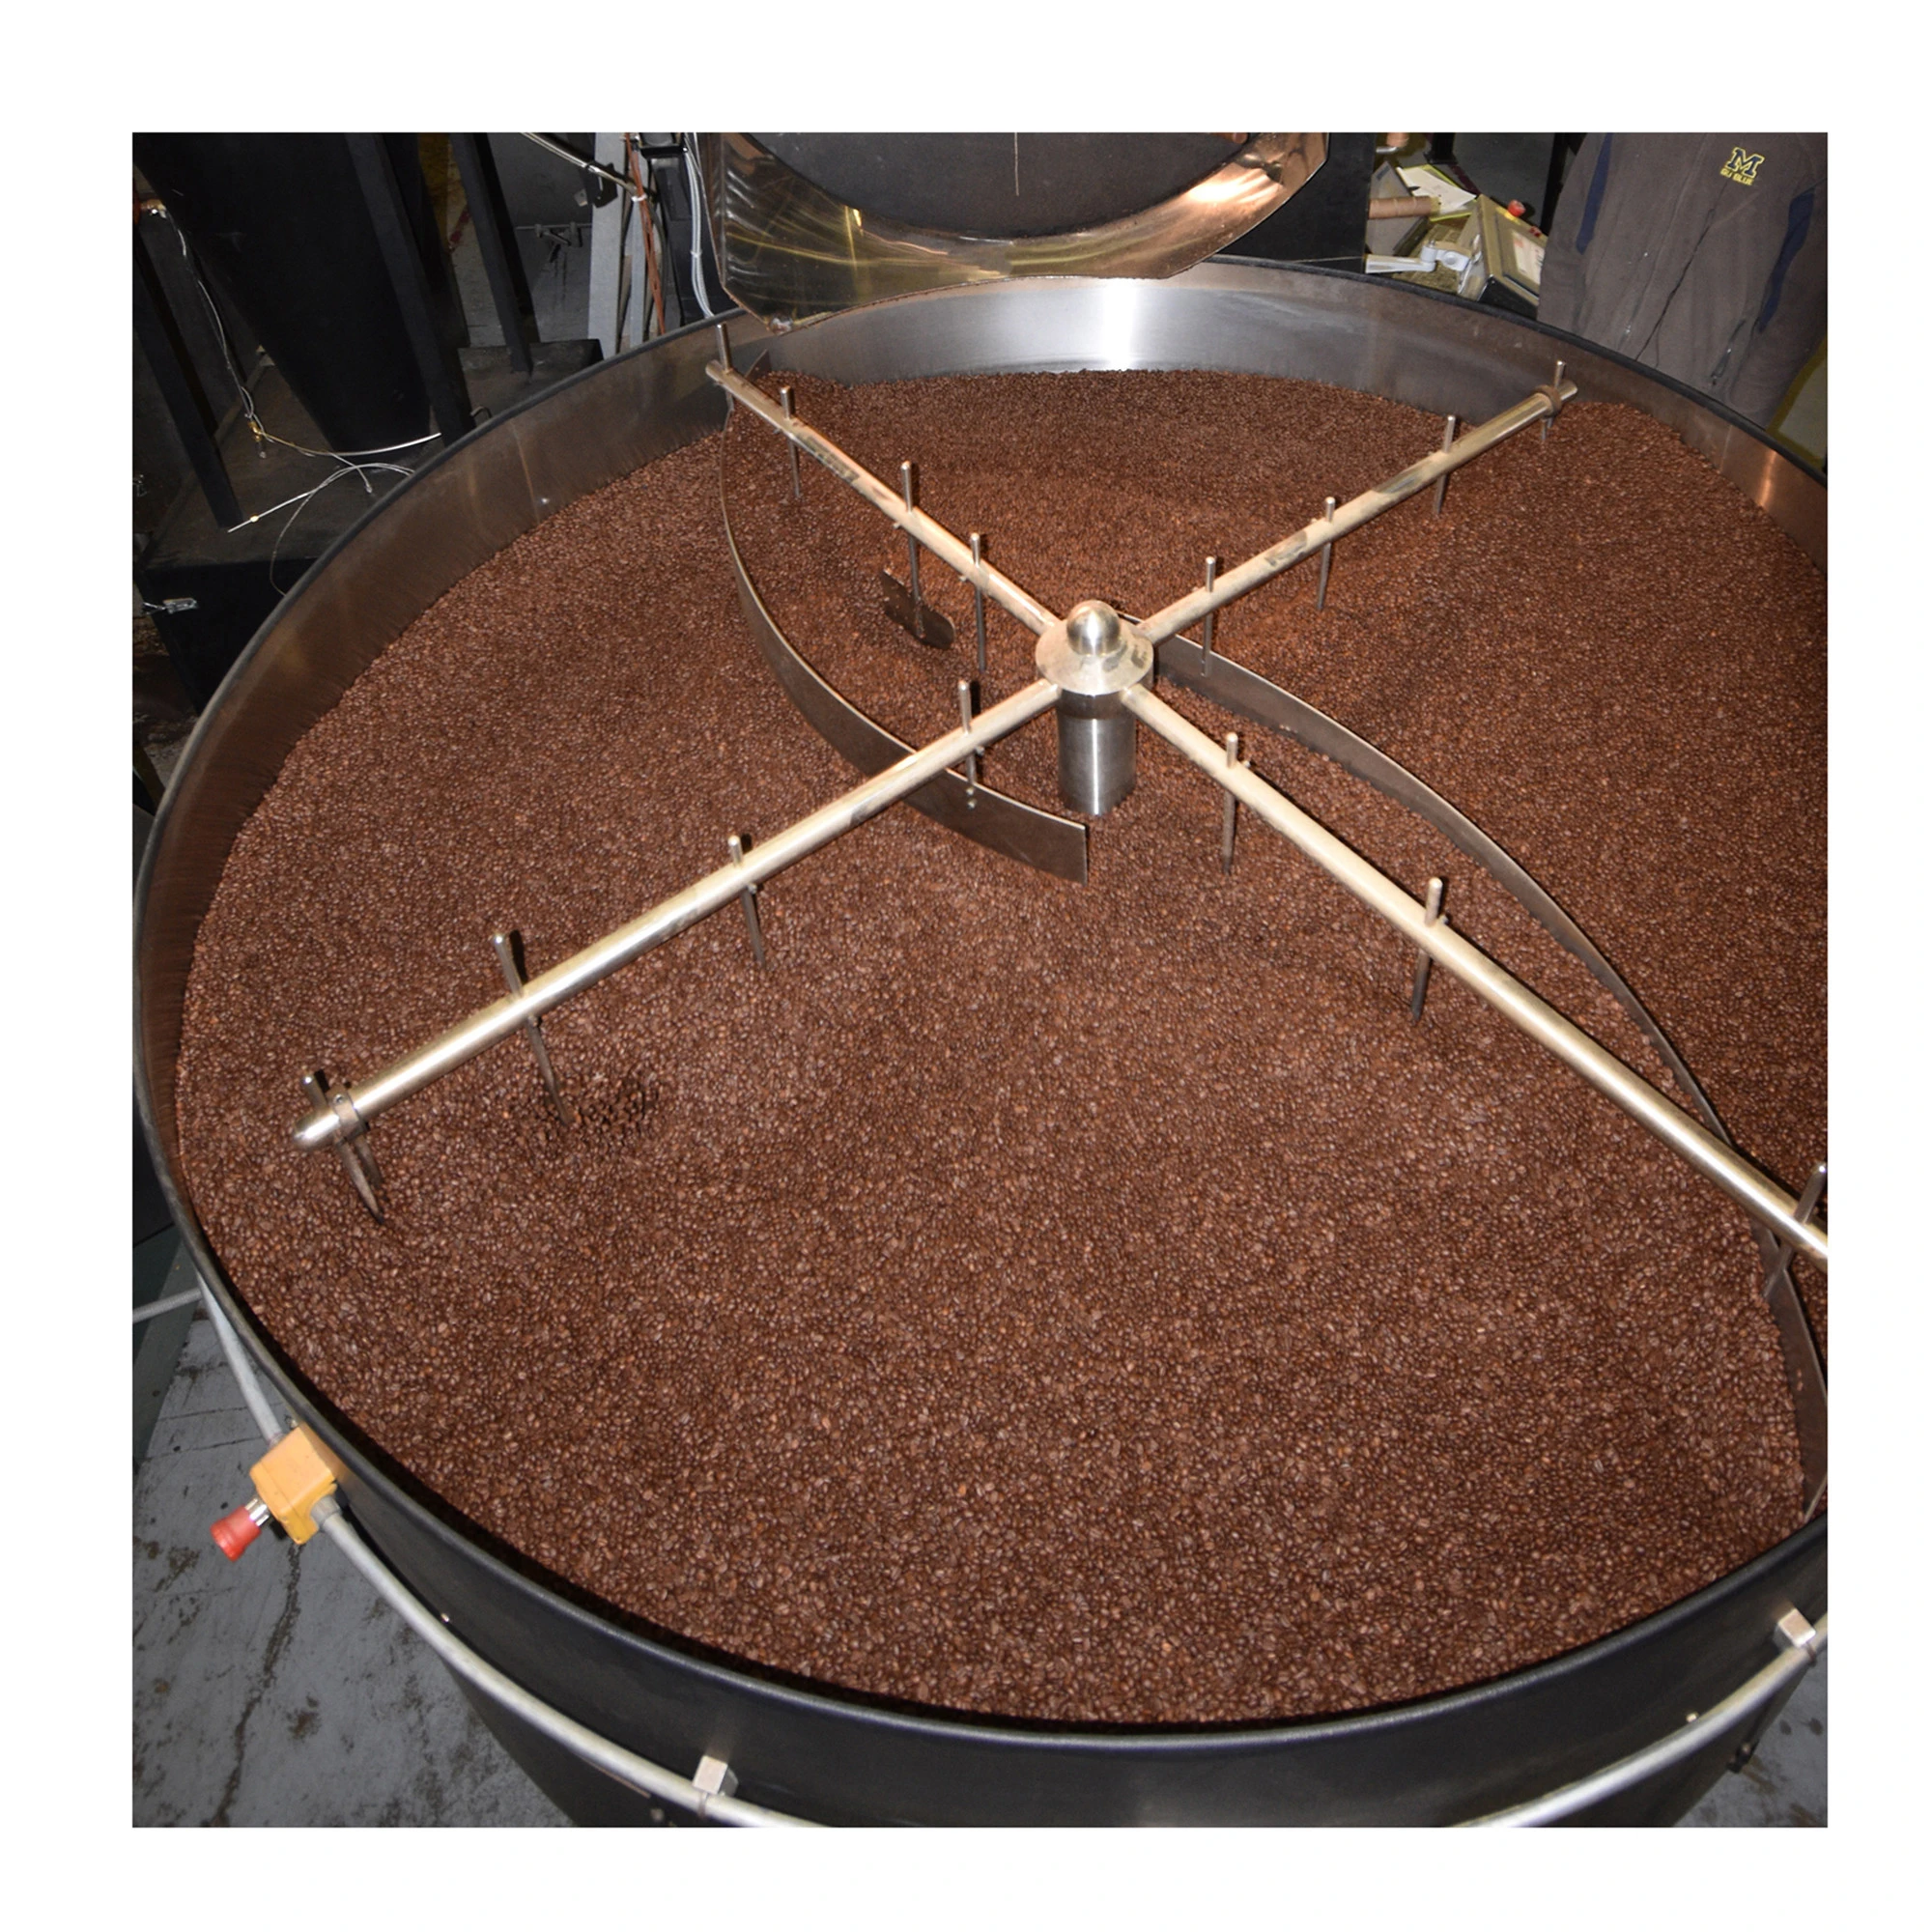 50lb Barrel |Chocolate Flavored Gourmet Coffee | Ground Coffee